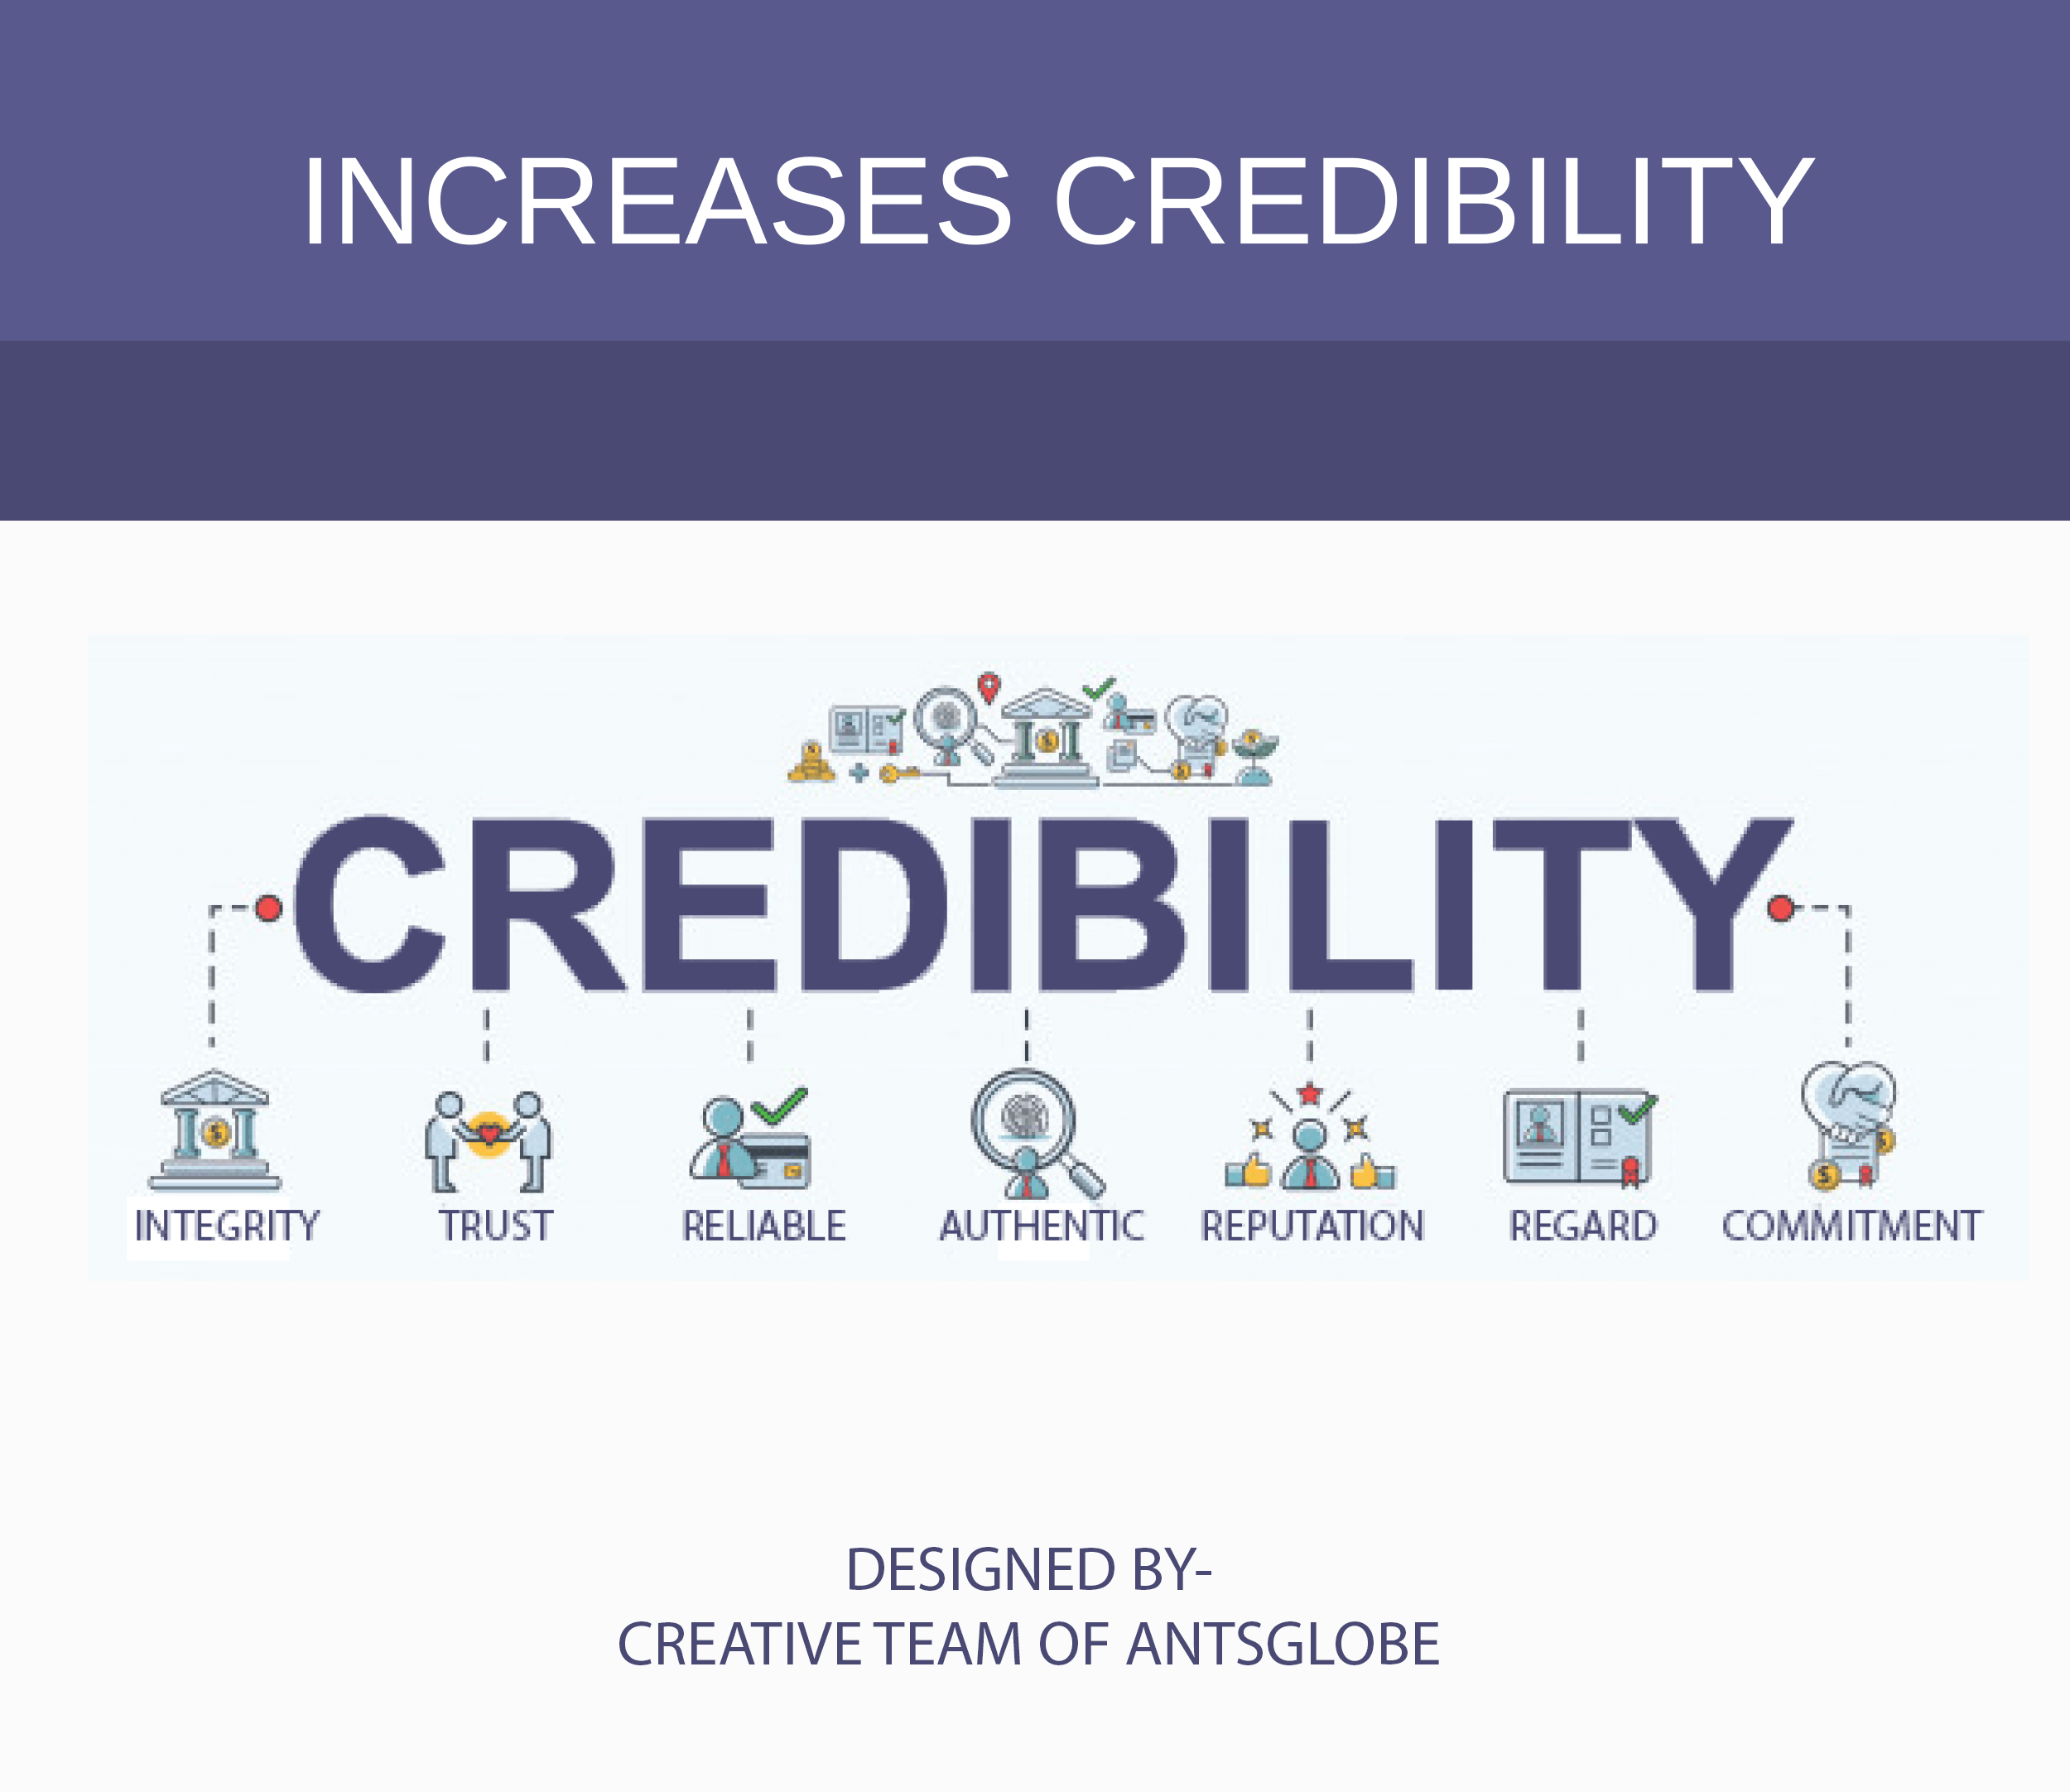 increased-credibility